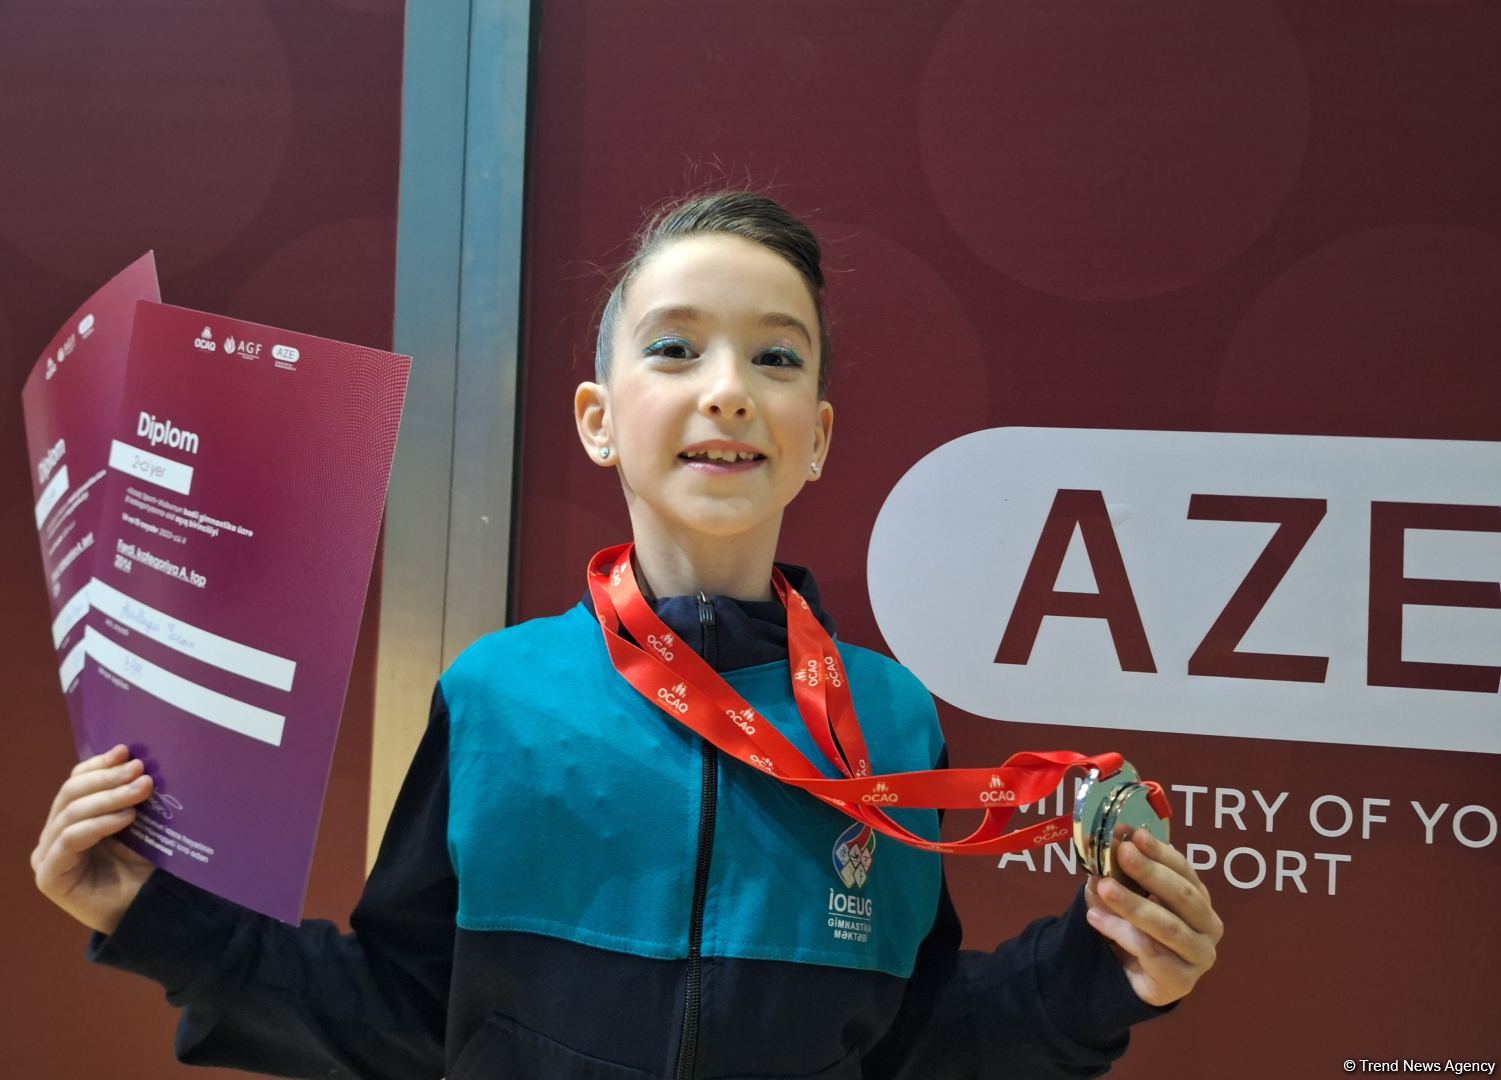 Success at Ojag Sports Club Open Championship brings vigor - Azerbaijani silver medalist